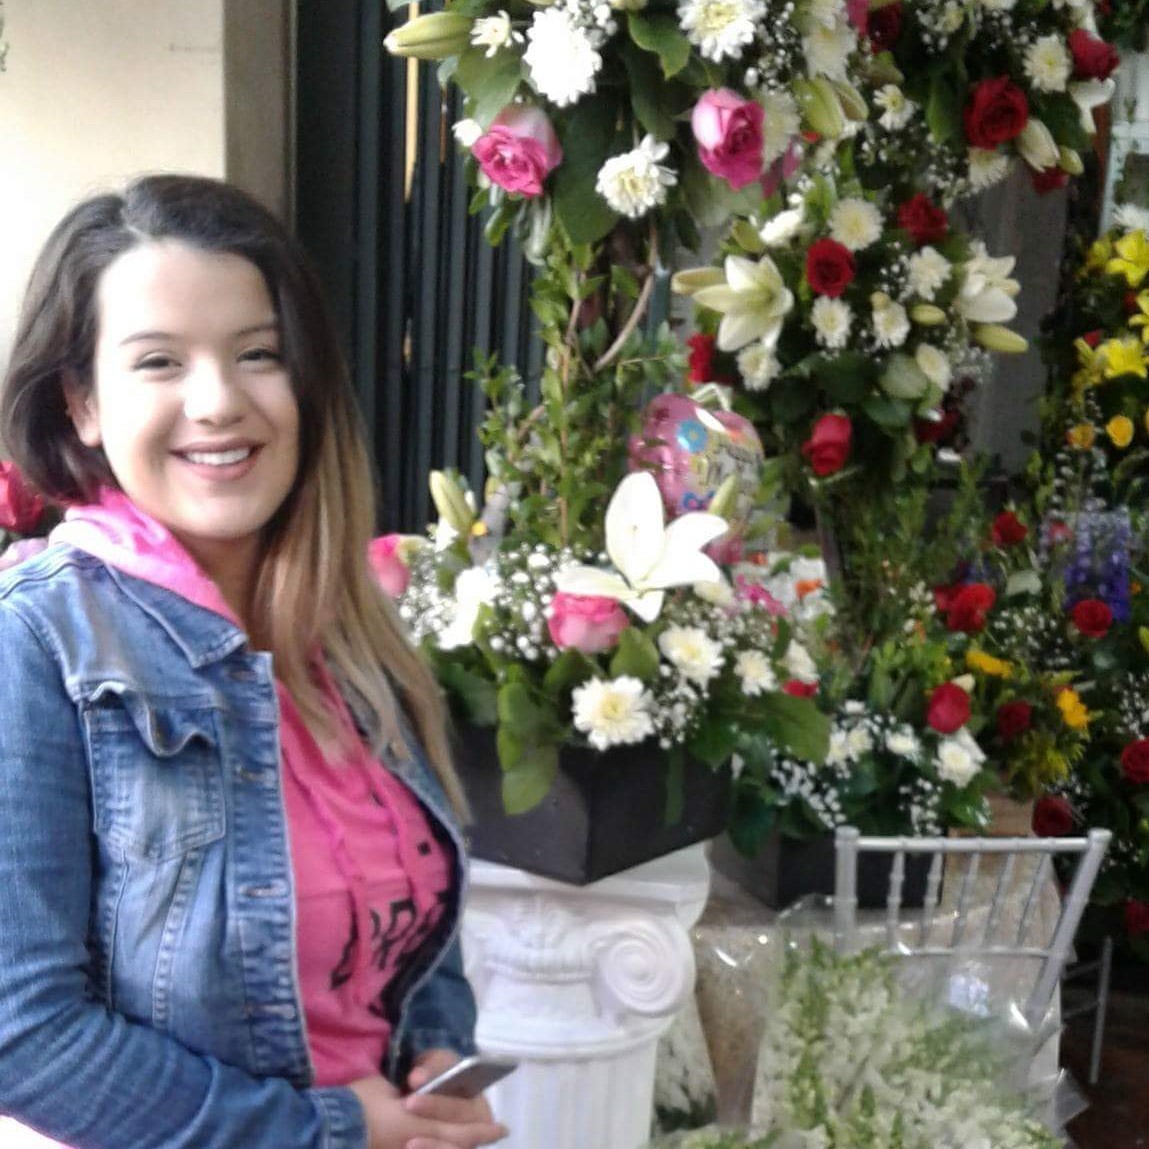 Araceli Espinosa from Lynwood, CA is the Flamingo's Flowers daily winner